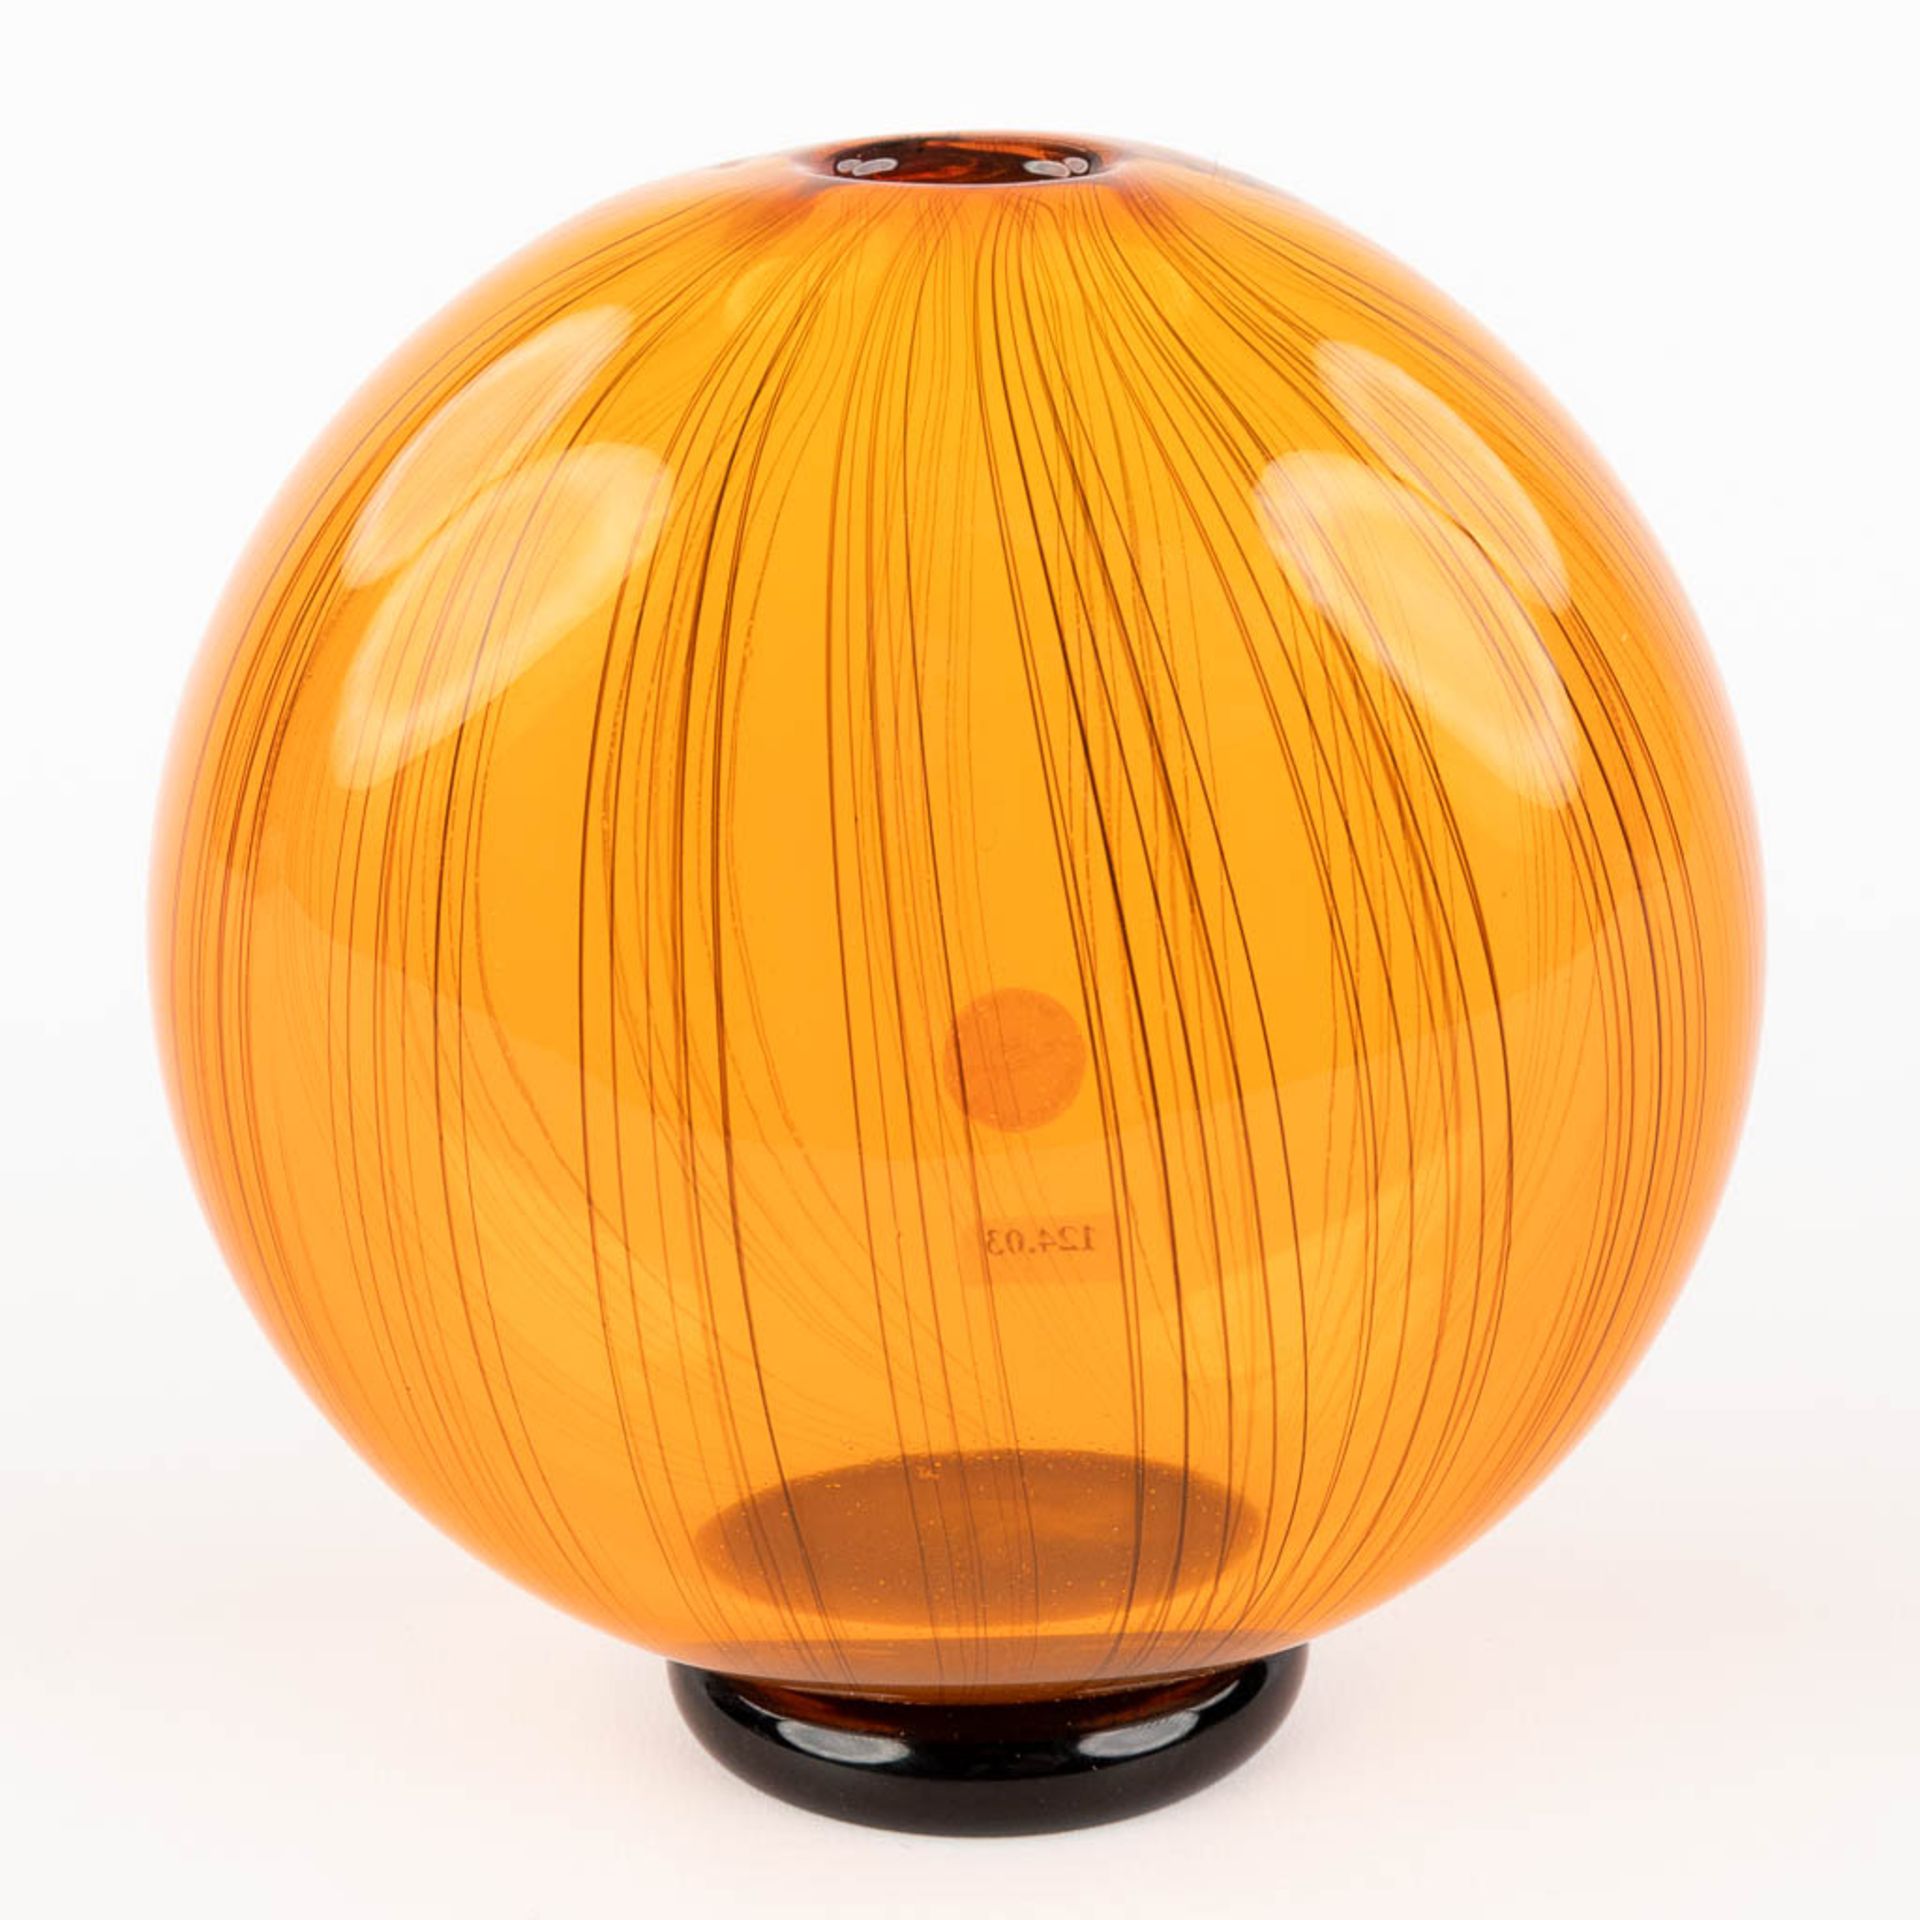 Seguso Viro, Murano, an orange glass vase. (D:8 x W:15 x H:16 cm) - Image 5 of 10